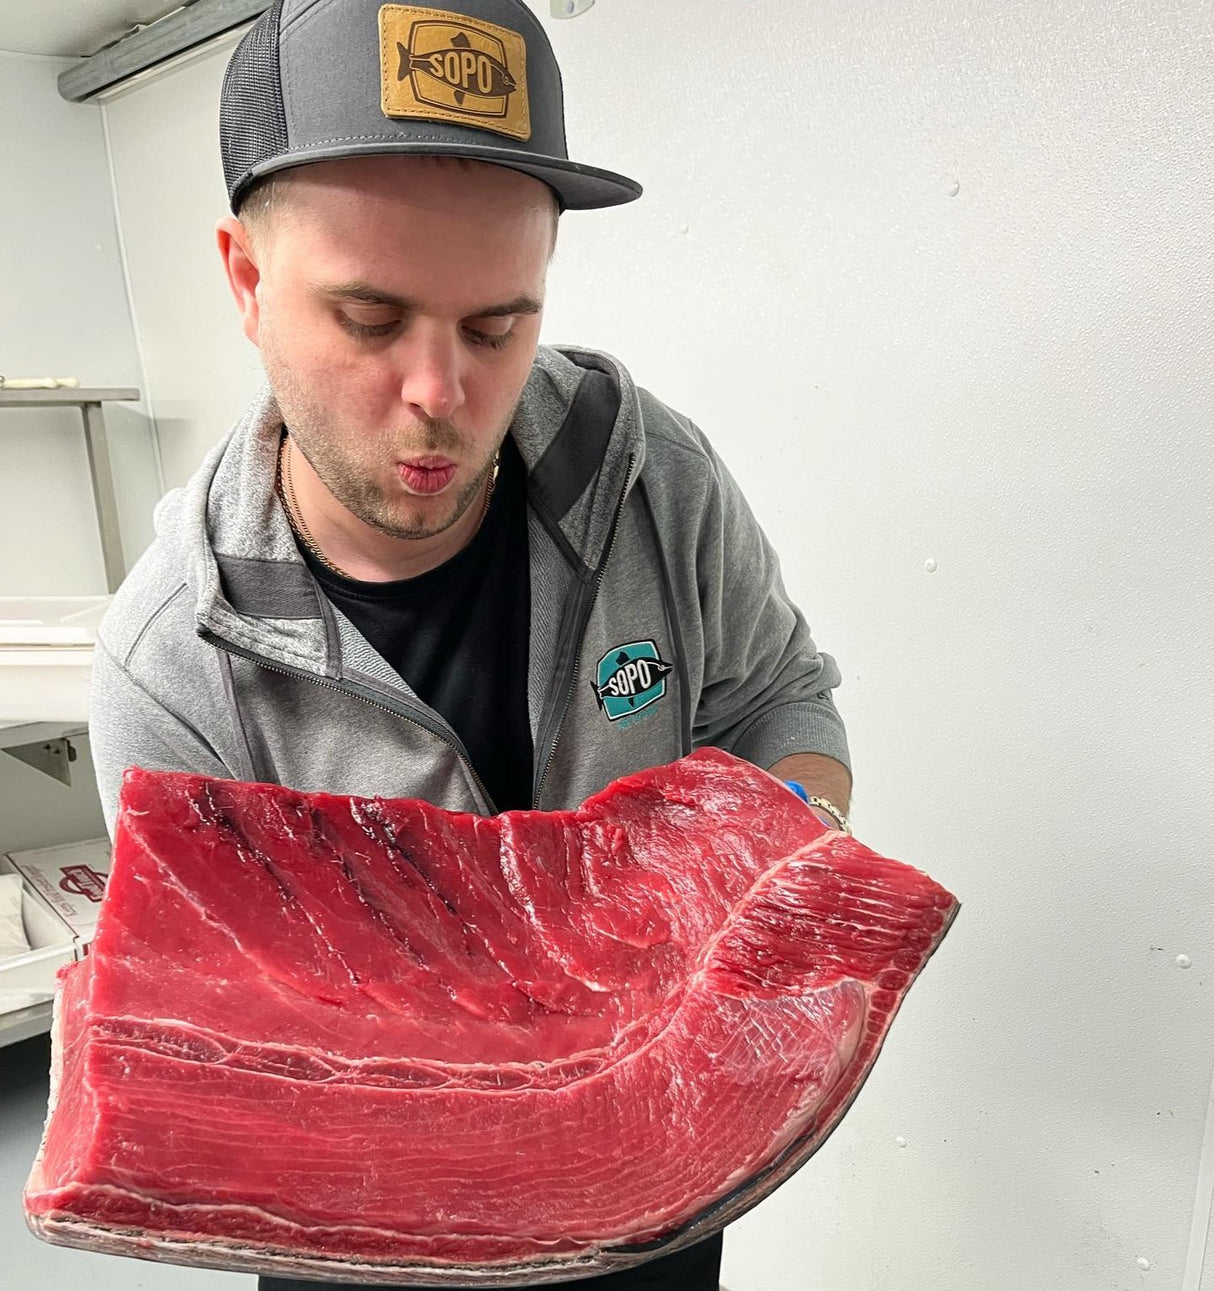 Maine Bluefin Tuna (Sushi-Grade) - SOLD OUT